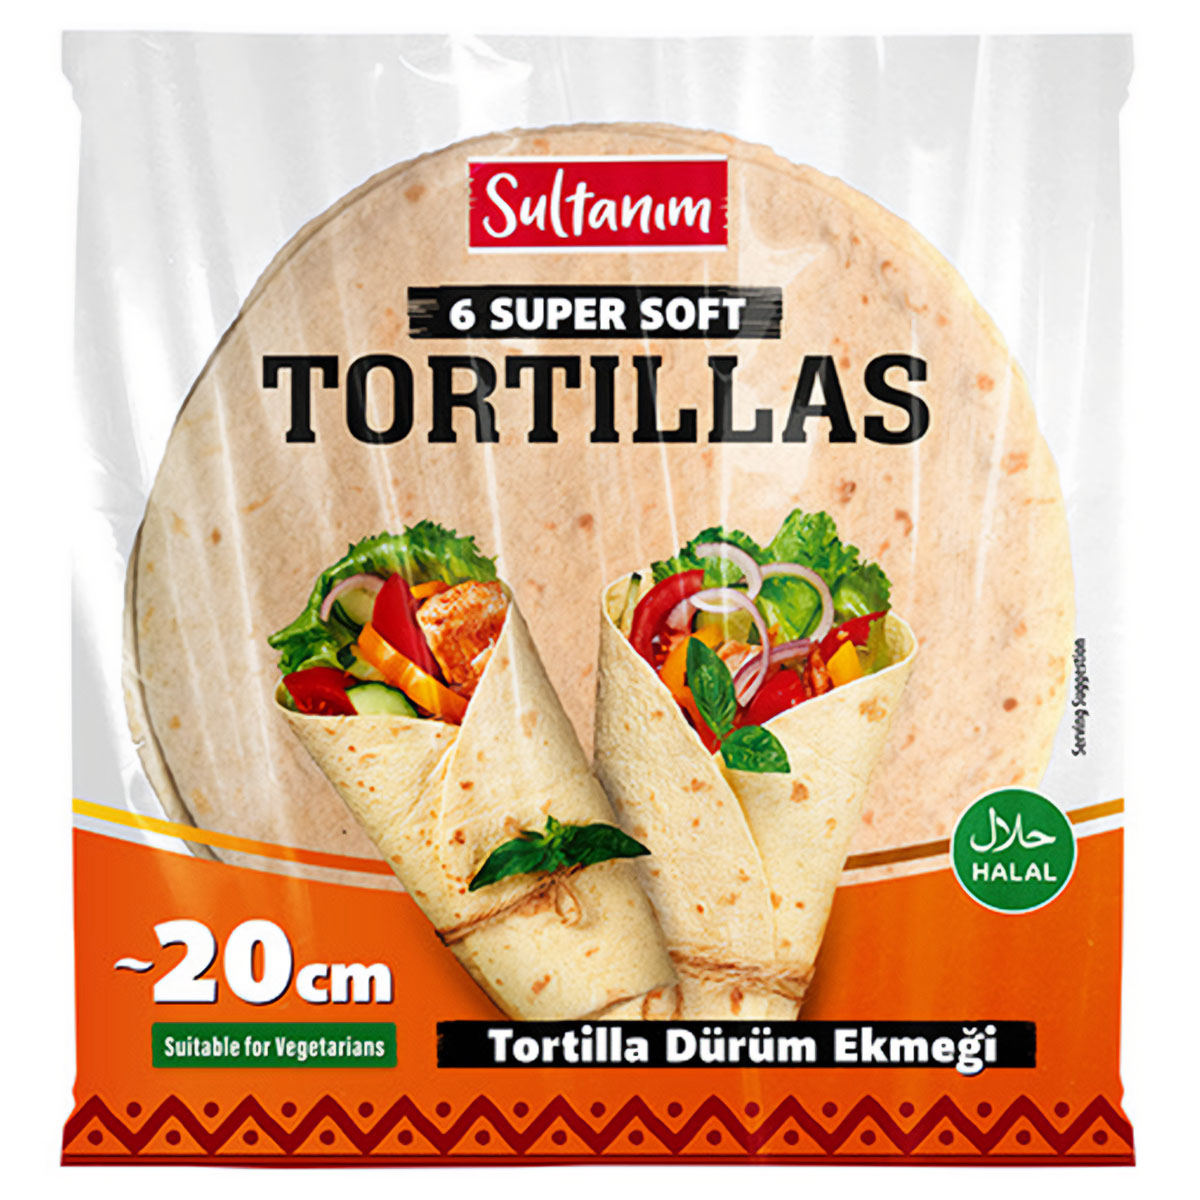 Sultanim - Super Soft Tortilla Wrap Bread 20cm - 6 Pack by Sultanim 200g.